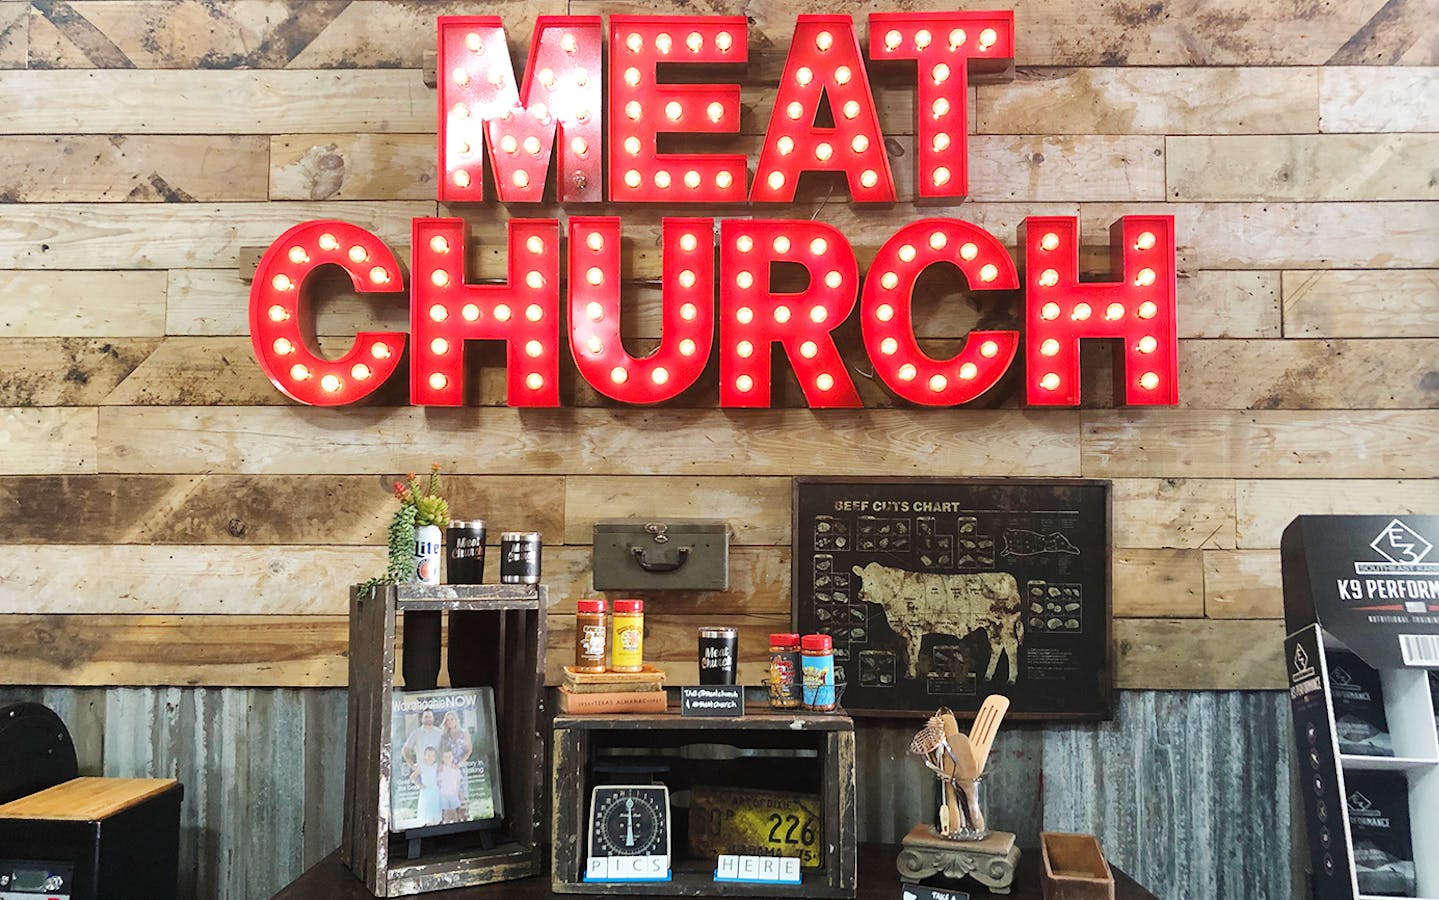 https://img.texasmonthly.com/2019/08/Meat-Church-BBQ.jpg?auto=compress&crop=faces&fit=crop&fm=jpg&h=900&ixlib=php-3.3.1&q=45&w=1600